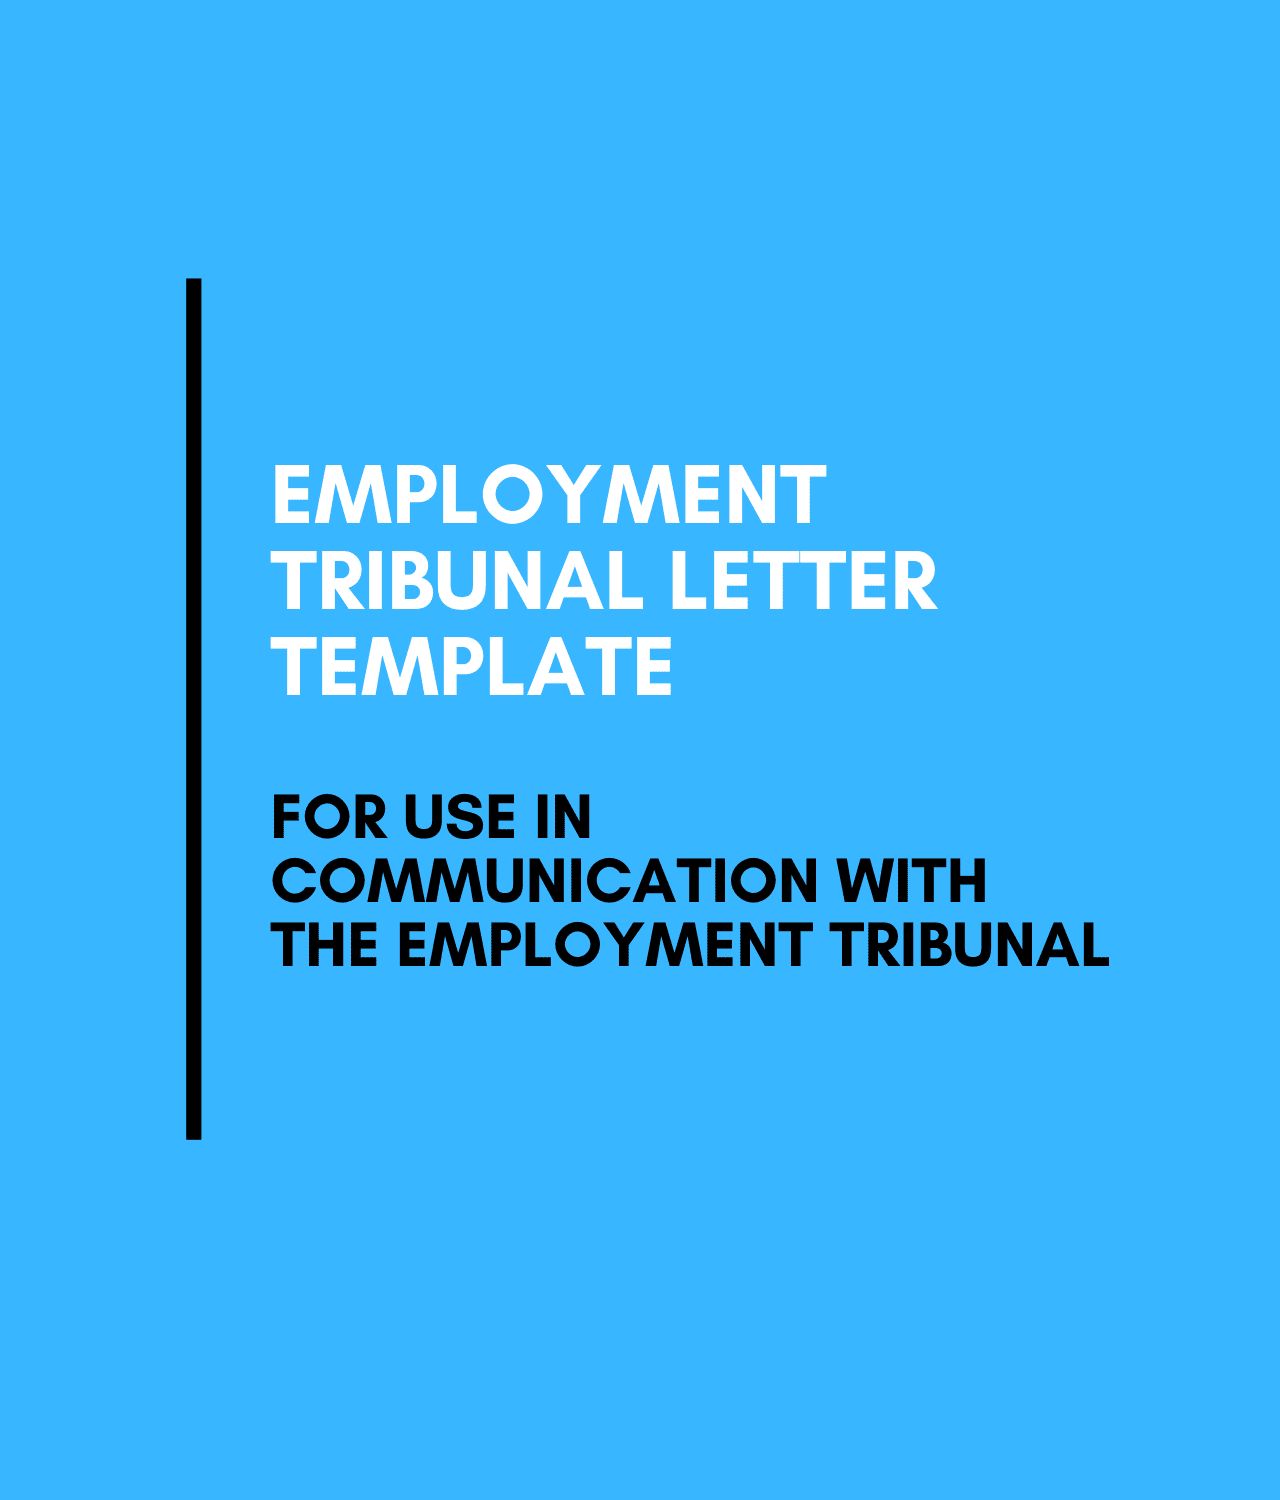 Employment Tribunal General Communication Letter Template